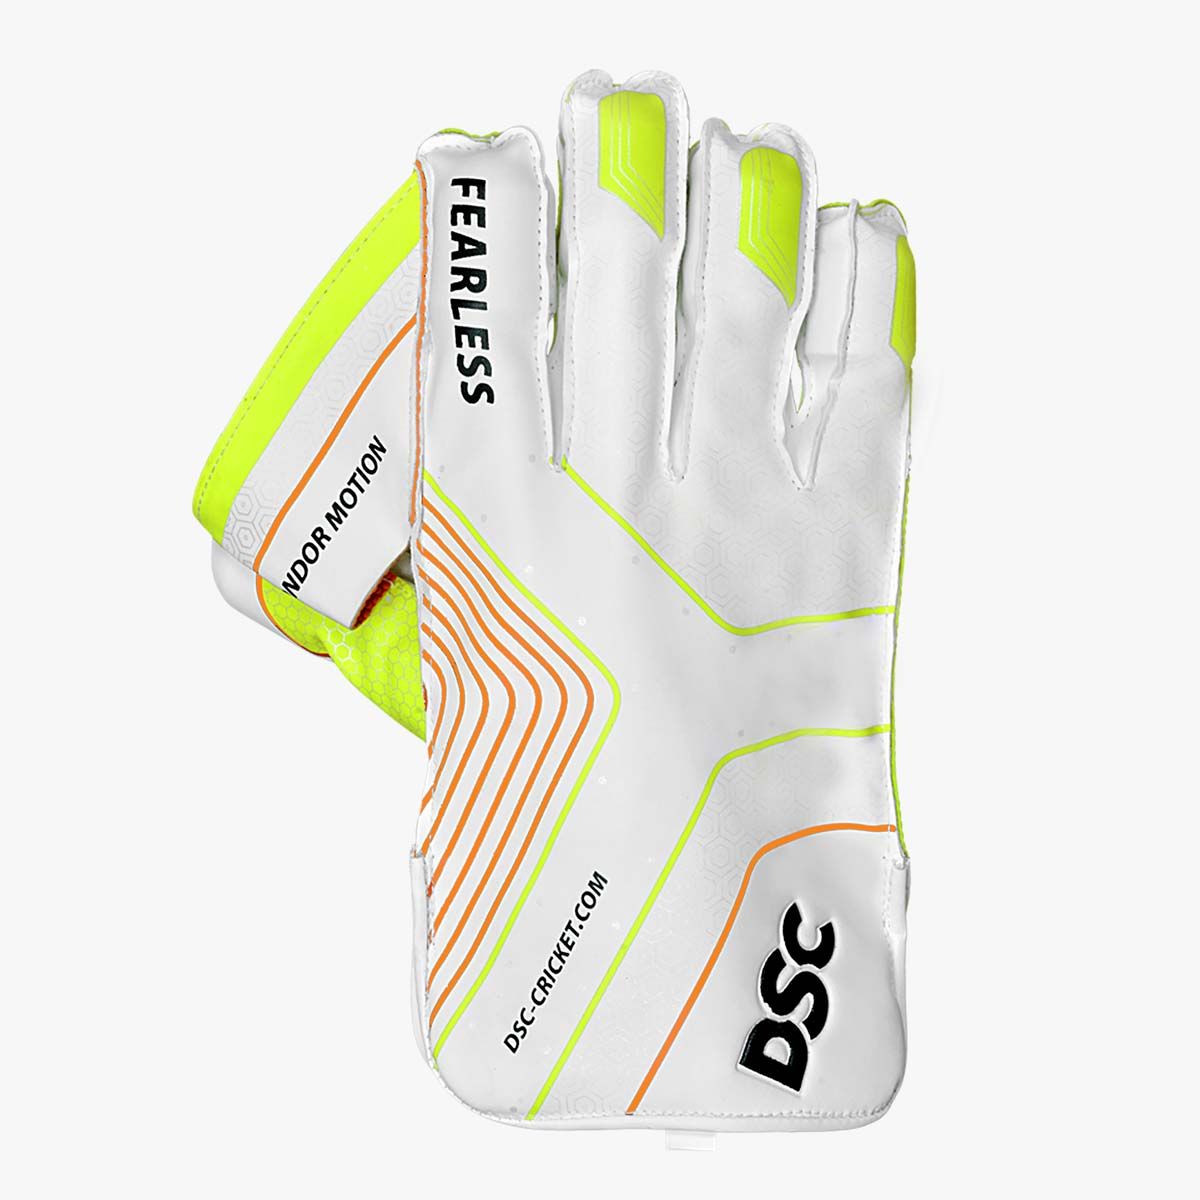 DSC Condor Motion Wicket Keeping Gloves